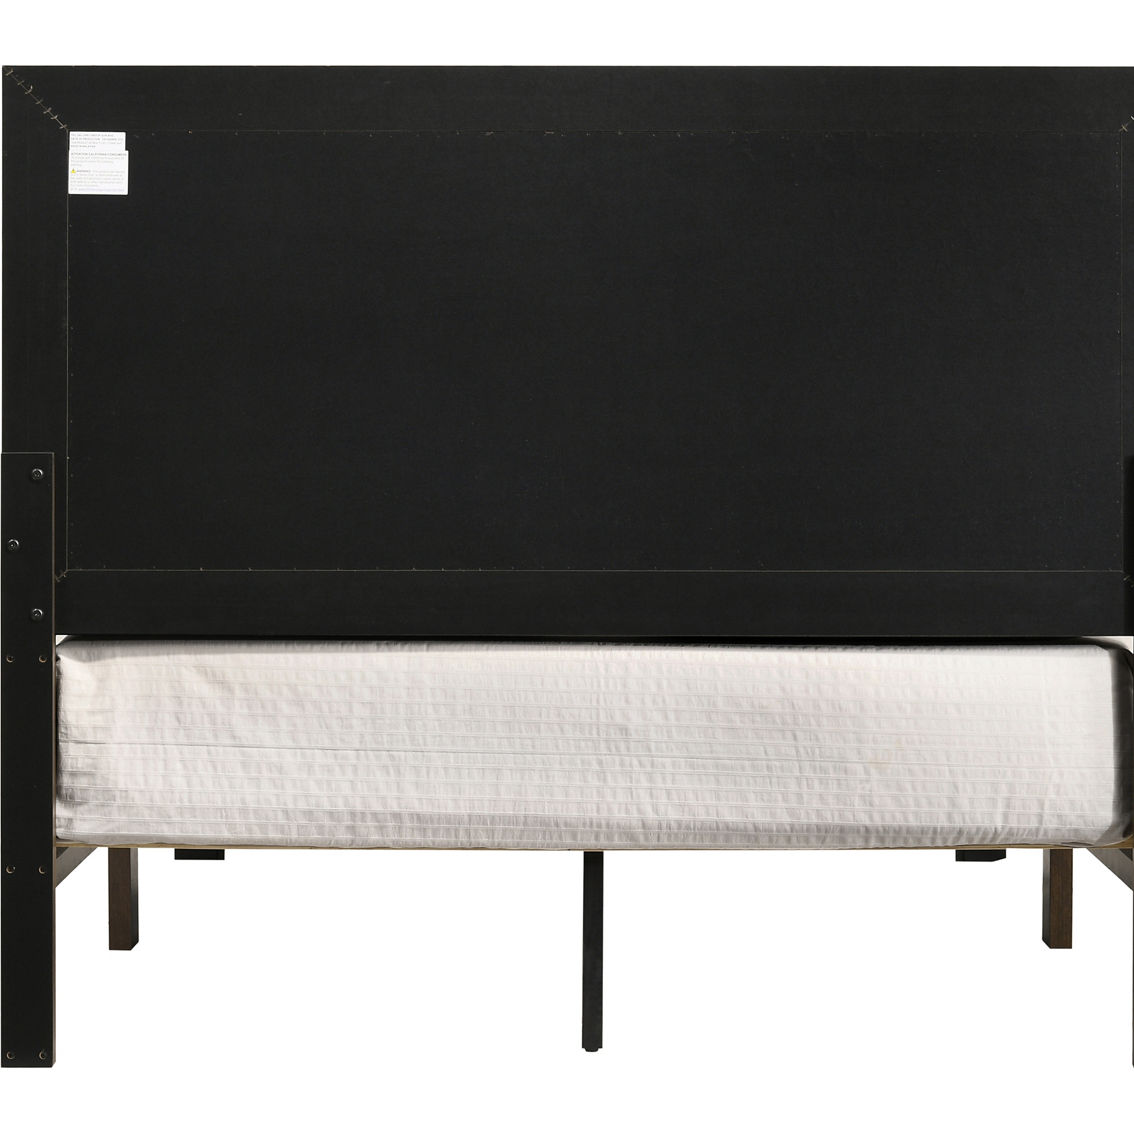 Furniture of America Kodo Rustic Wood Panel Bed - Image 3 of 3